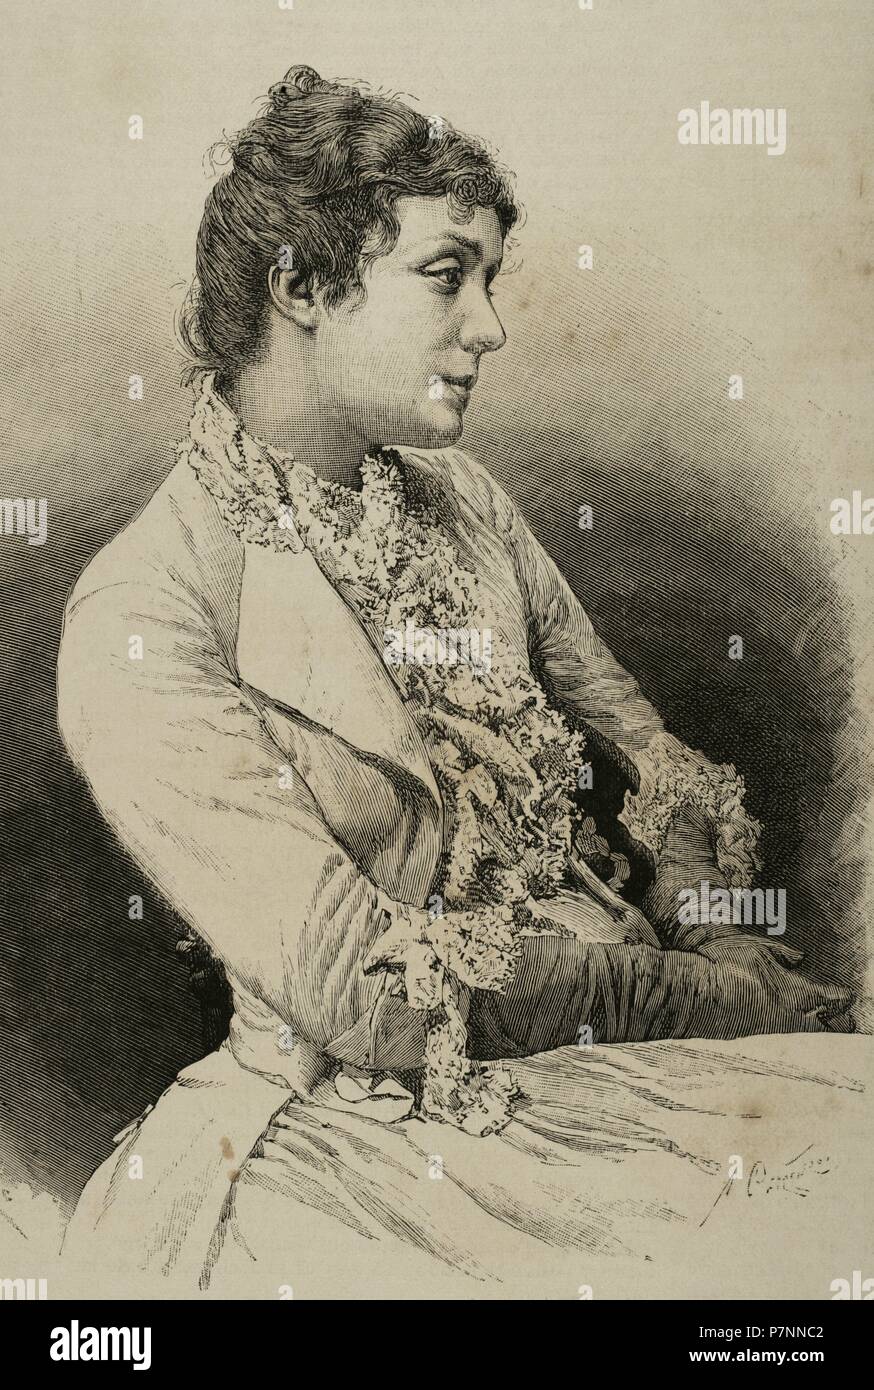 Eleonora Duse (1858-1924). Italienische Schauspielerin. Porträt. Kupferstich von Arturo Carretero. "La Ilustracion Espanola y Americana", 1890. Stockfoto